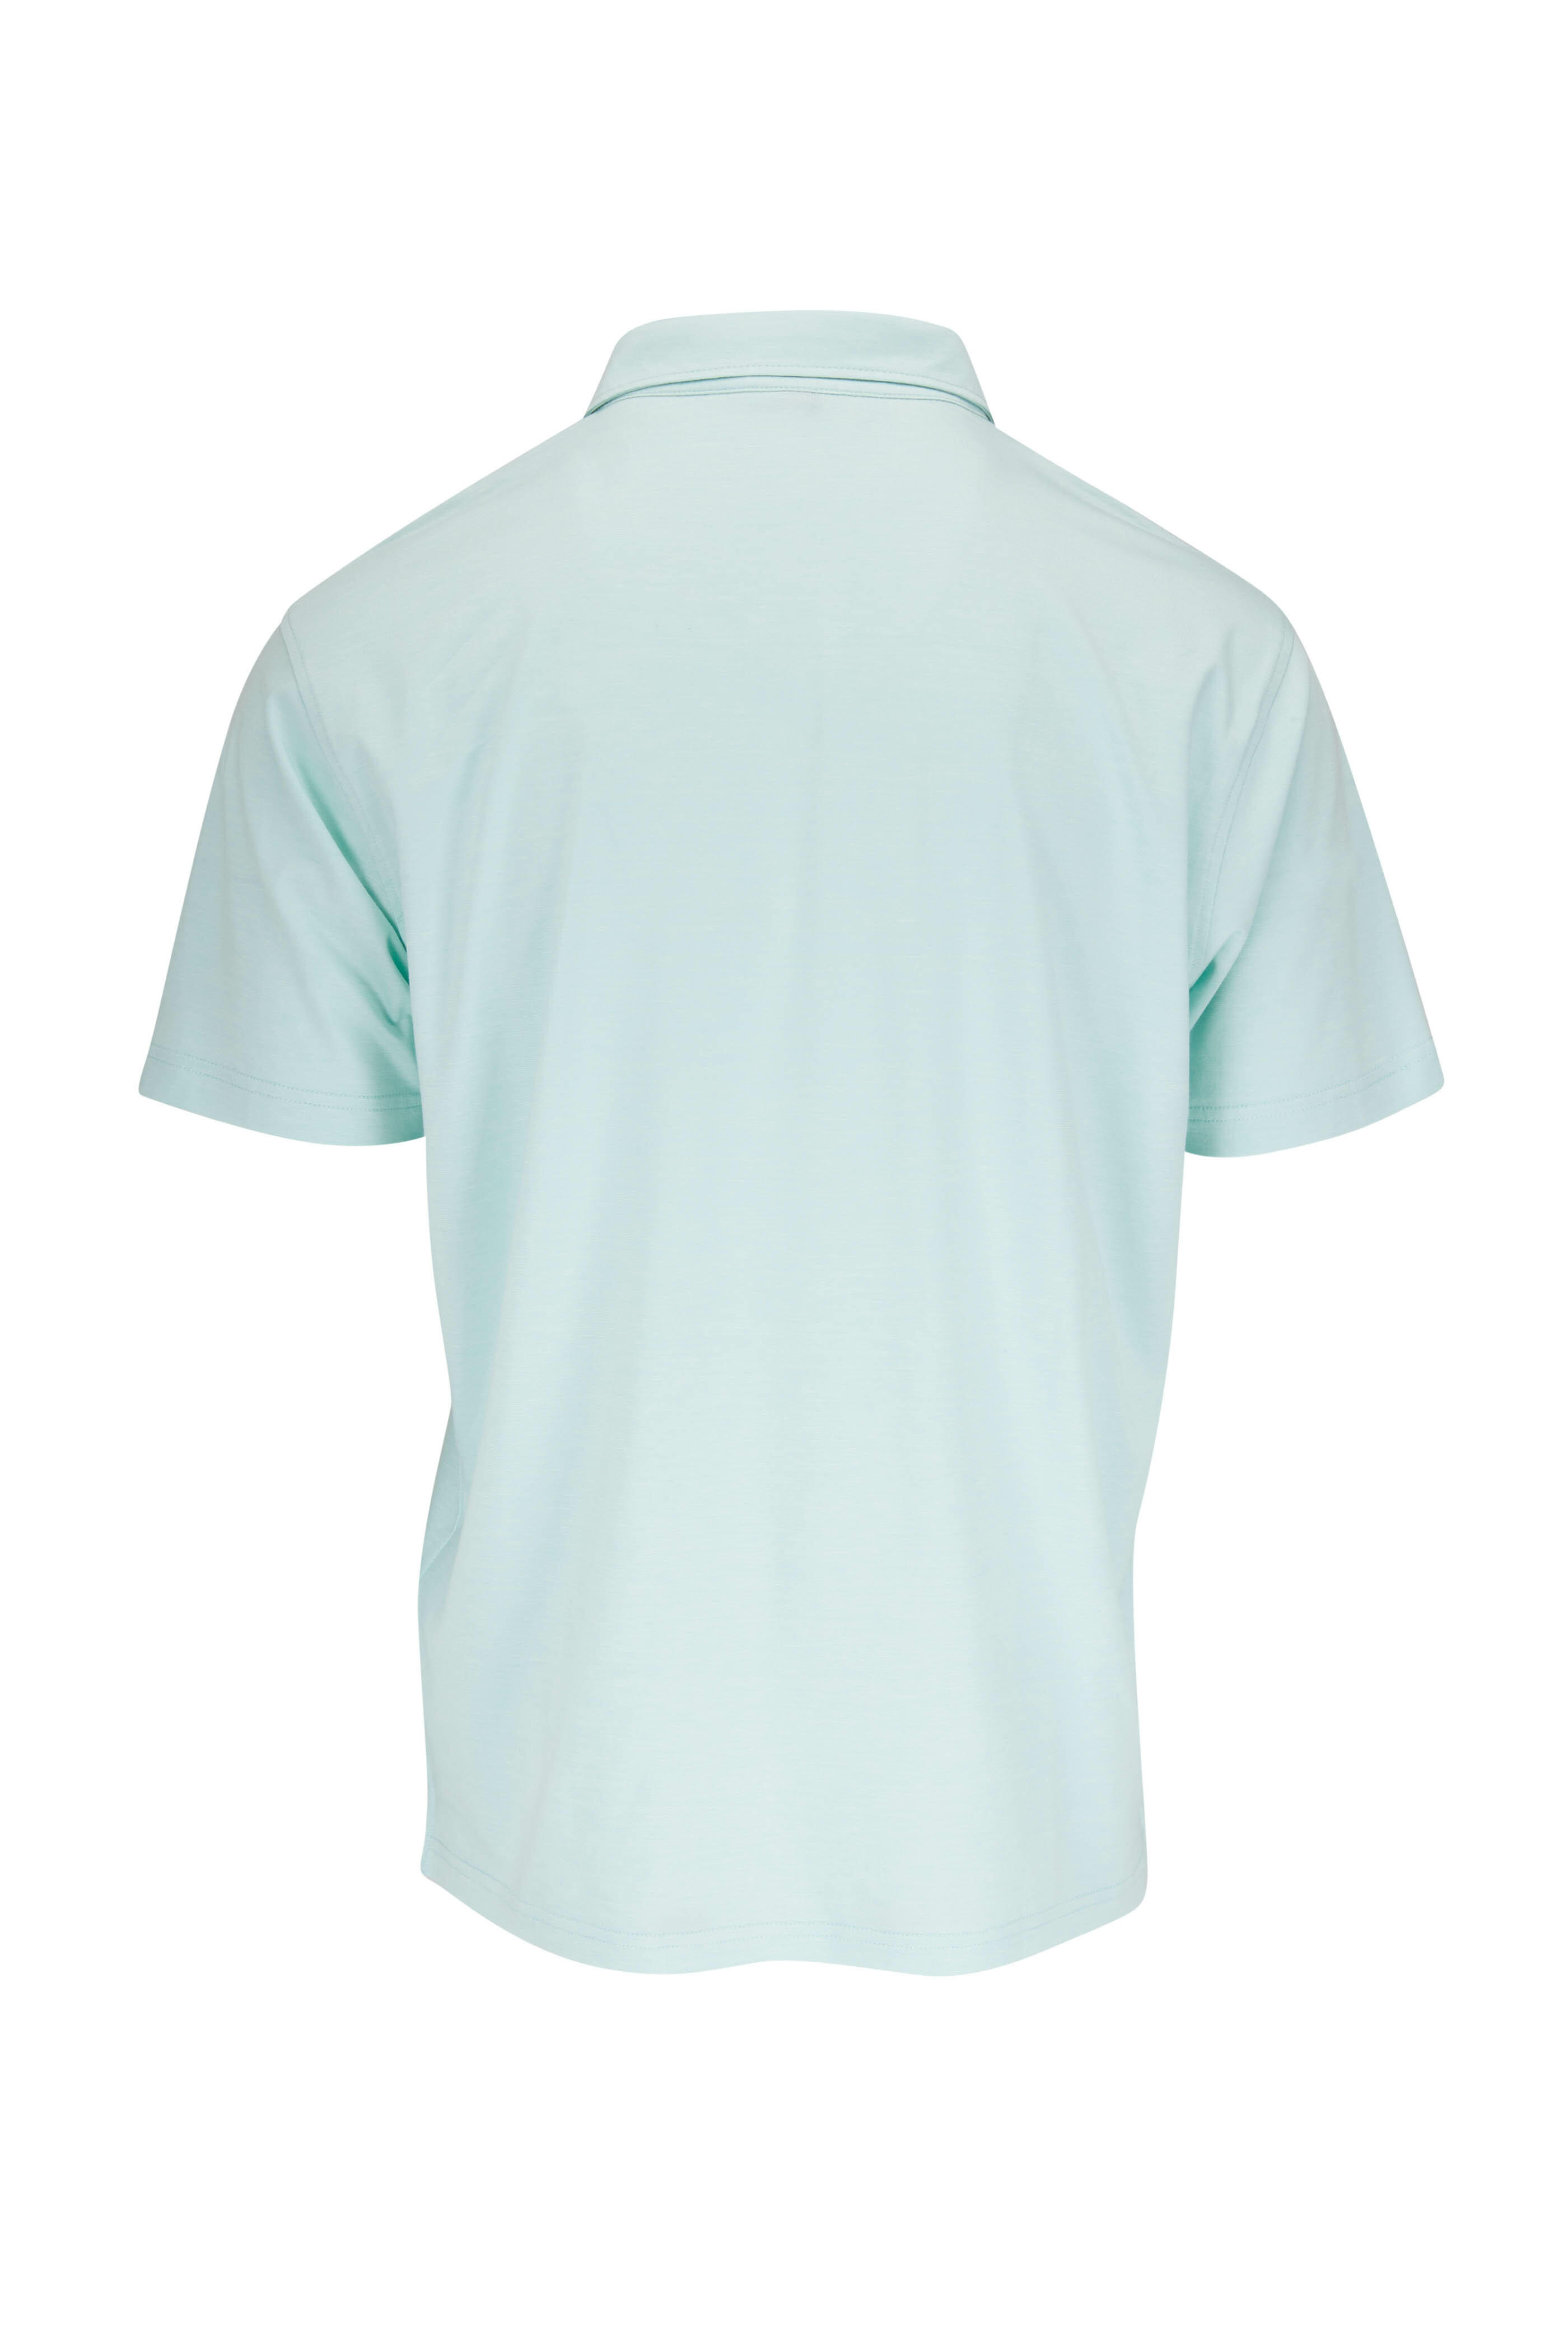 Logo Polo Shirt  Customized Peter Millar Men's Vessel Capri